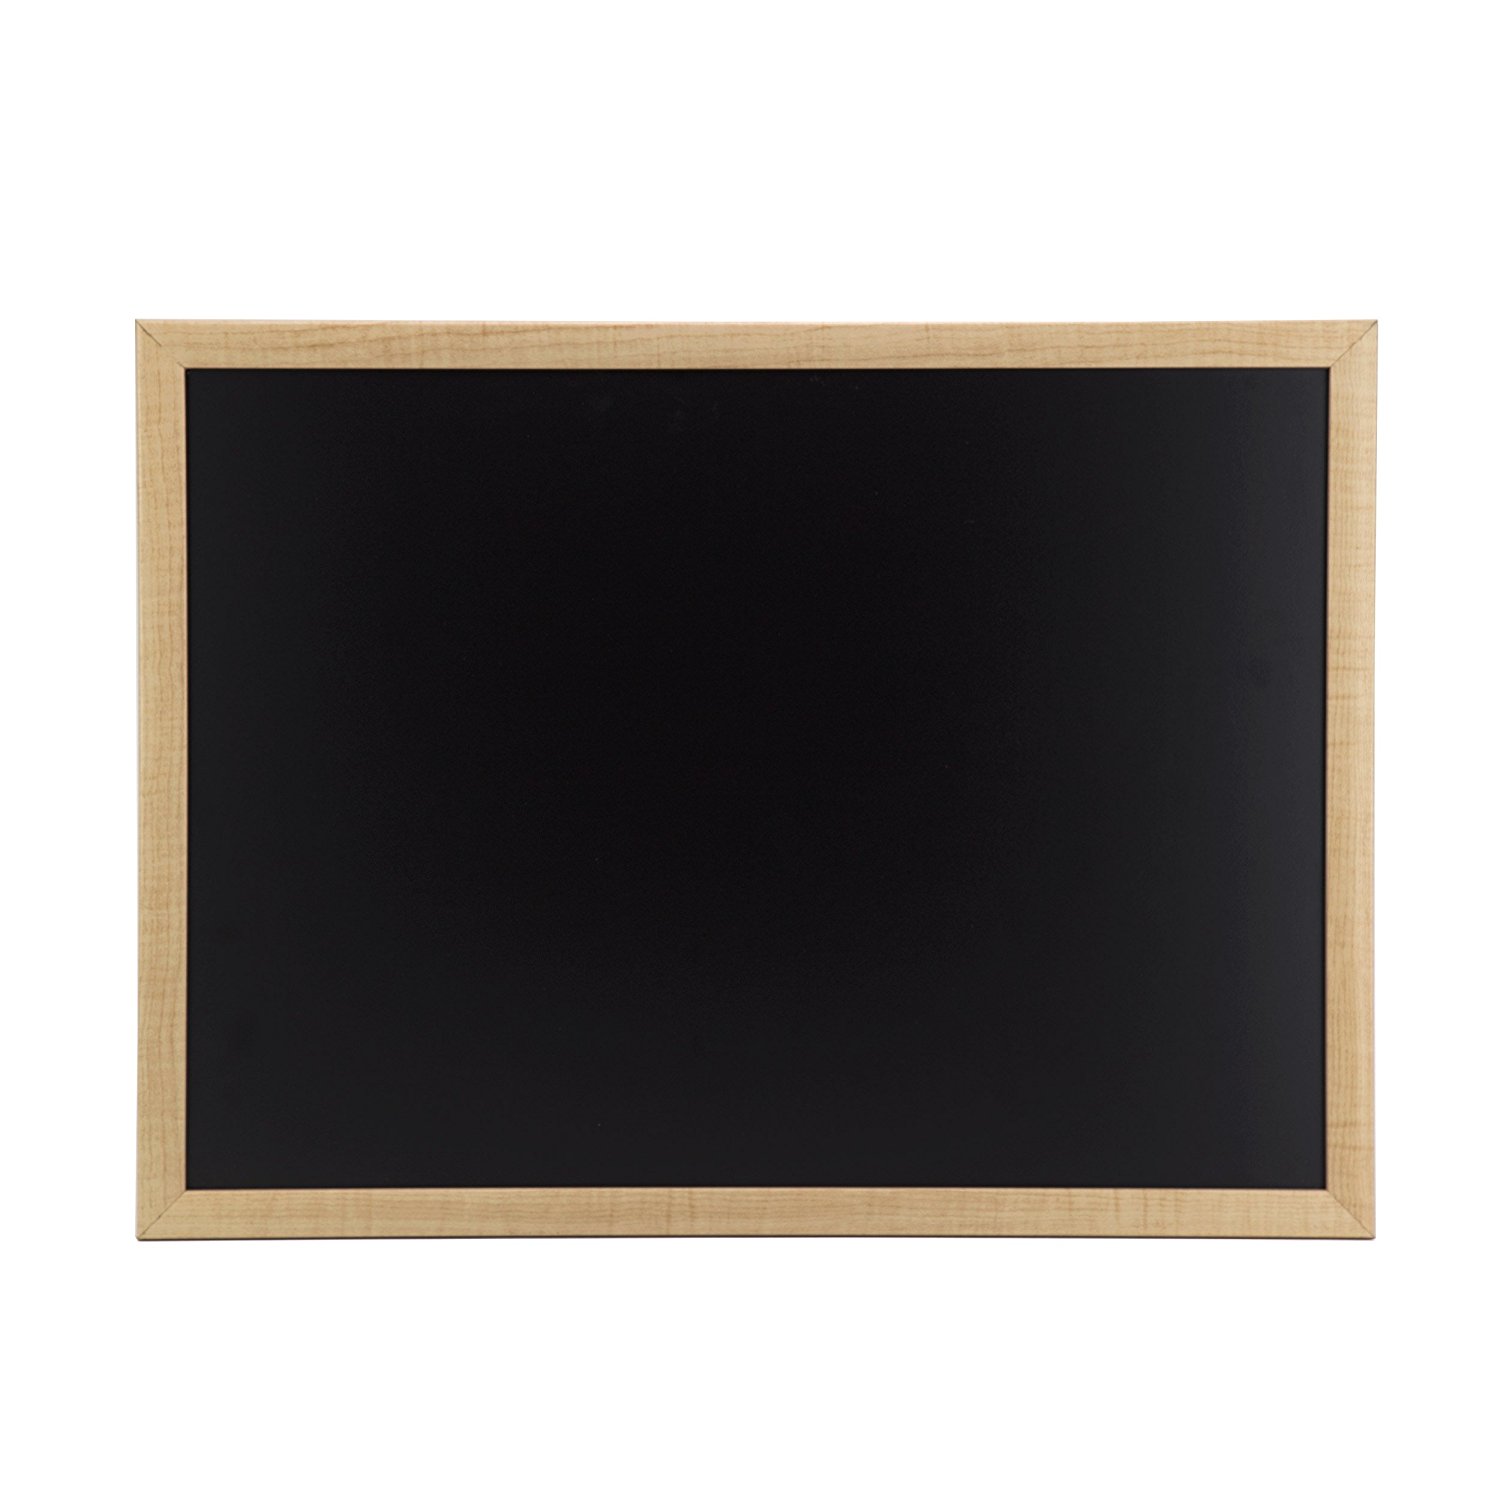 Amazon.com : U Brands Chalkboard, 23 x 17 Inches, Oak Frame : Office ...